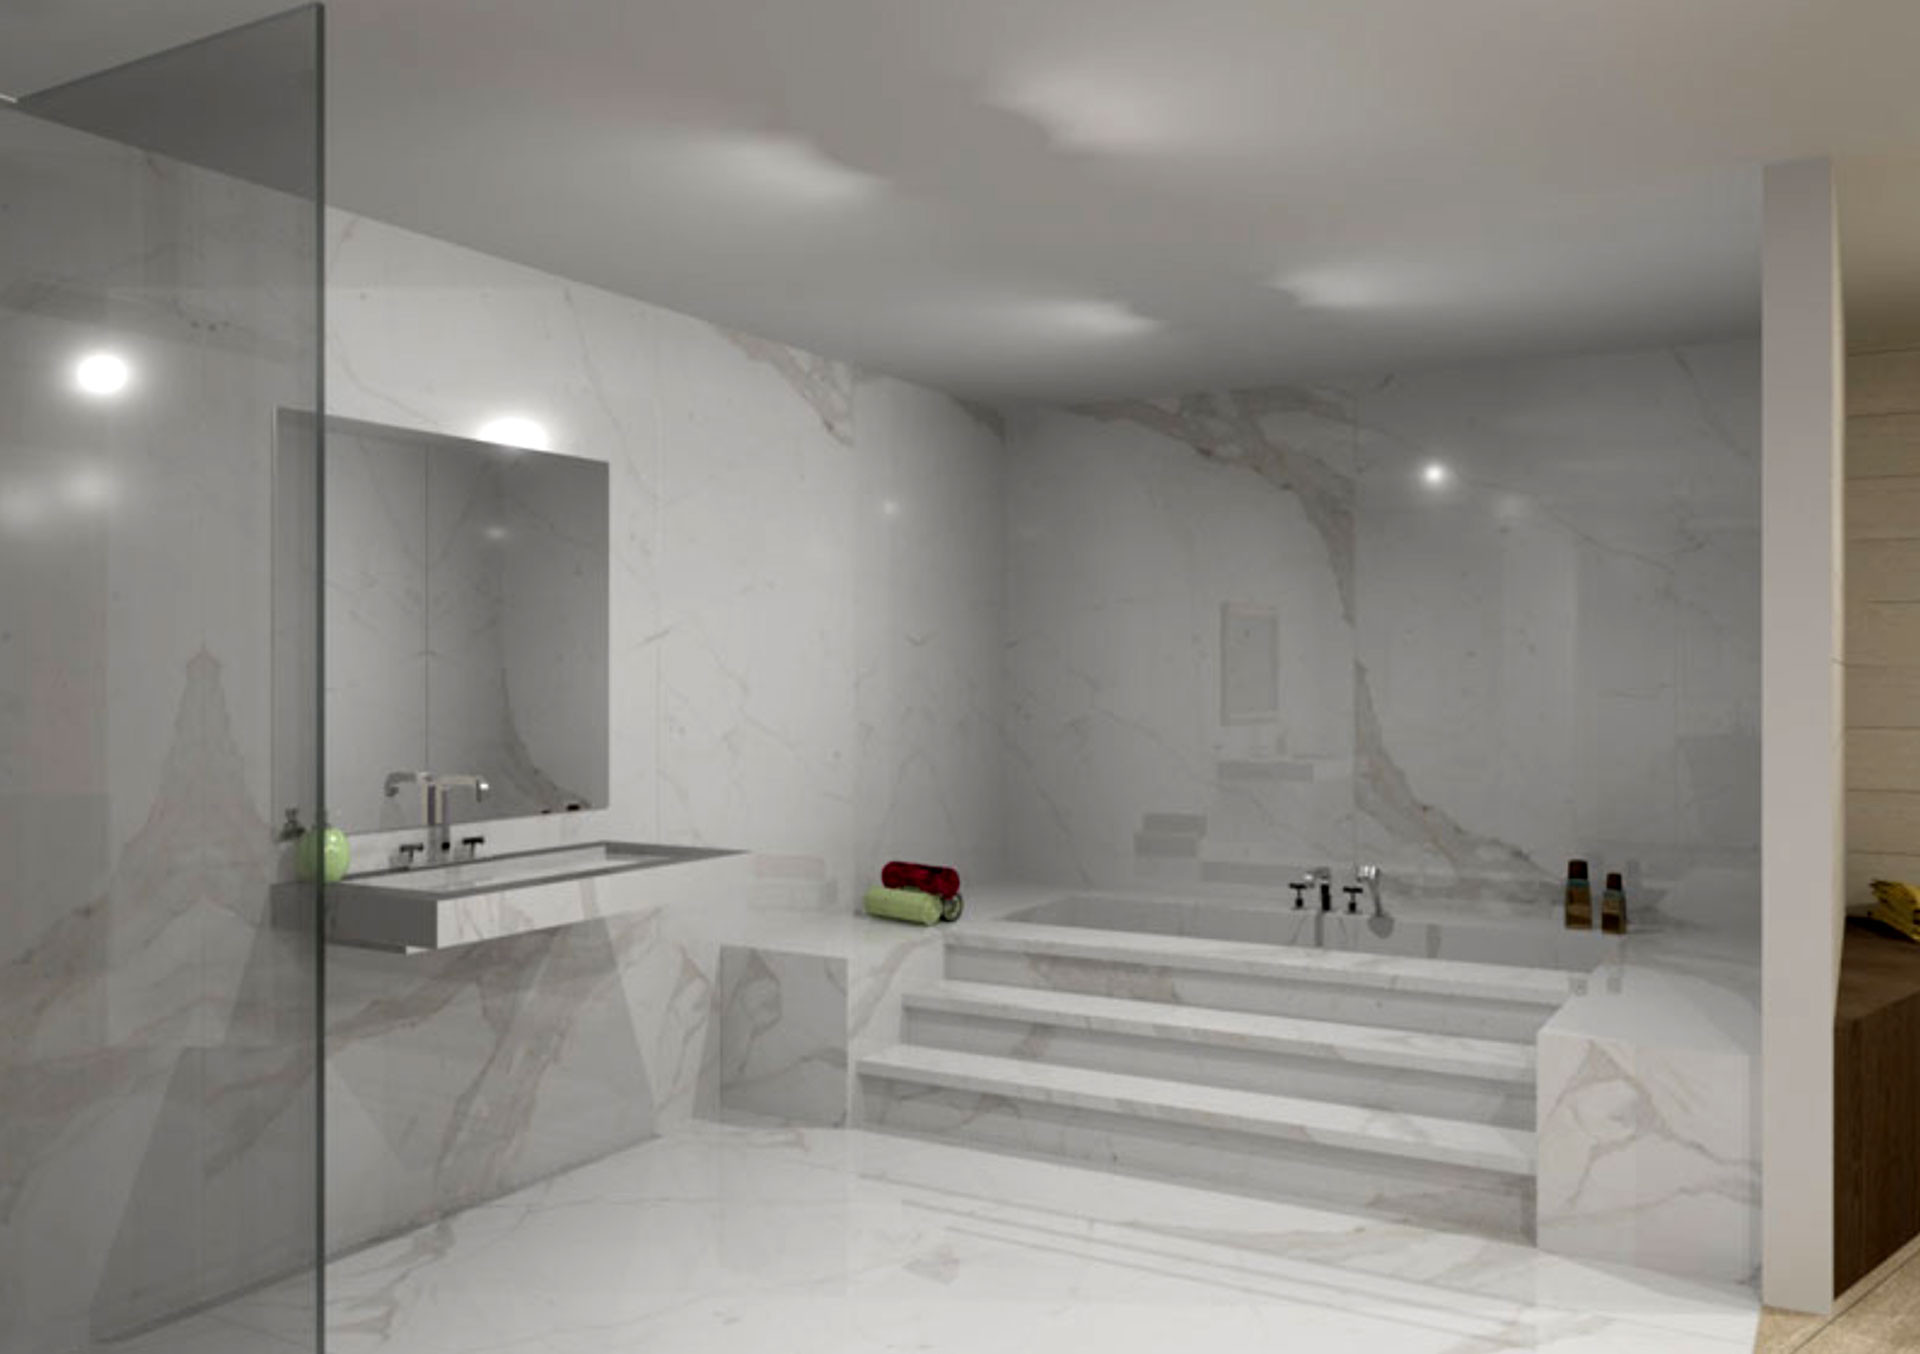 Stone Floor Tiles Bathroom
 The contemporary bathroom with Stonepeak’s porcelain floor